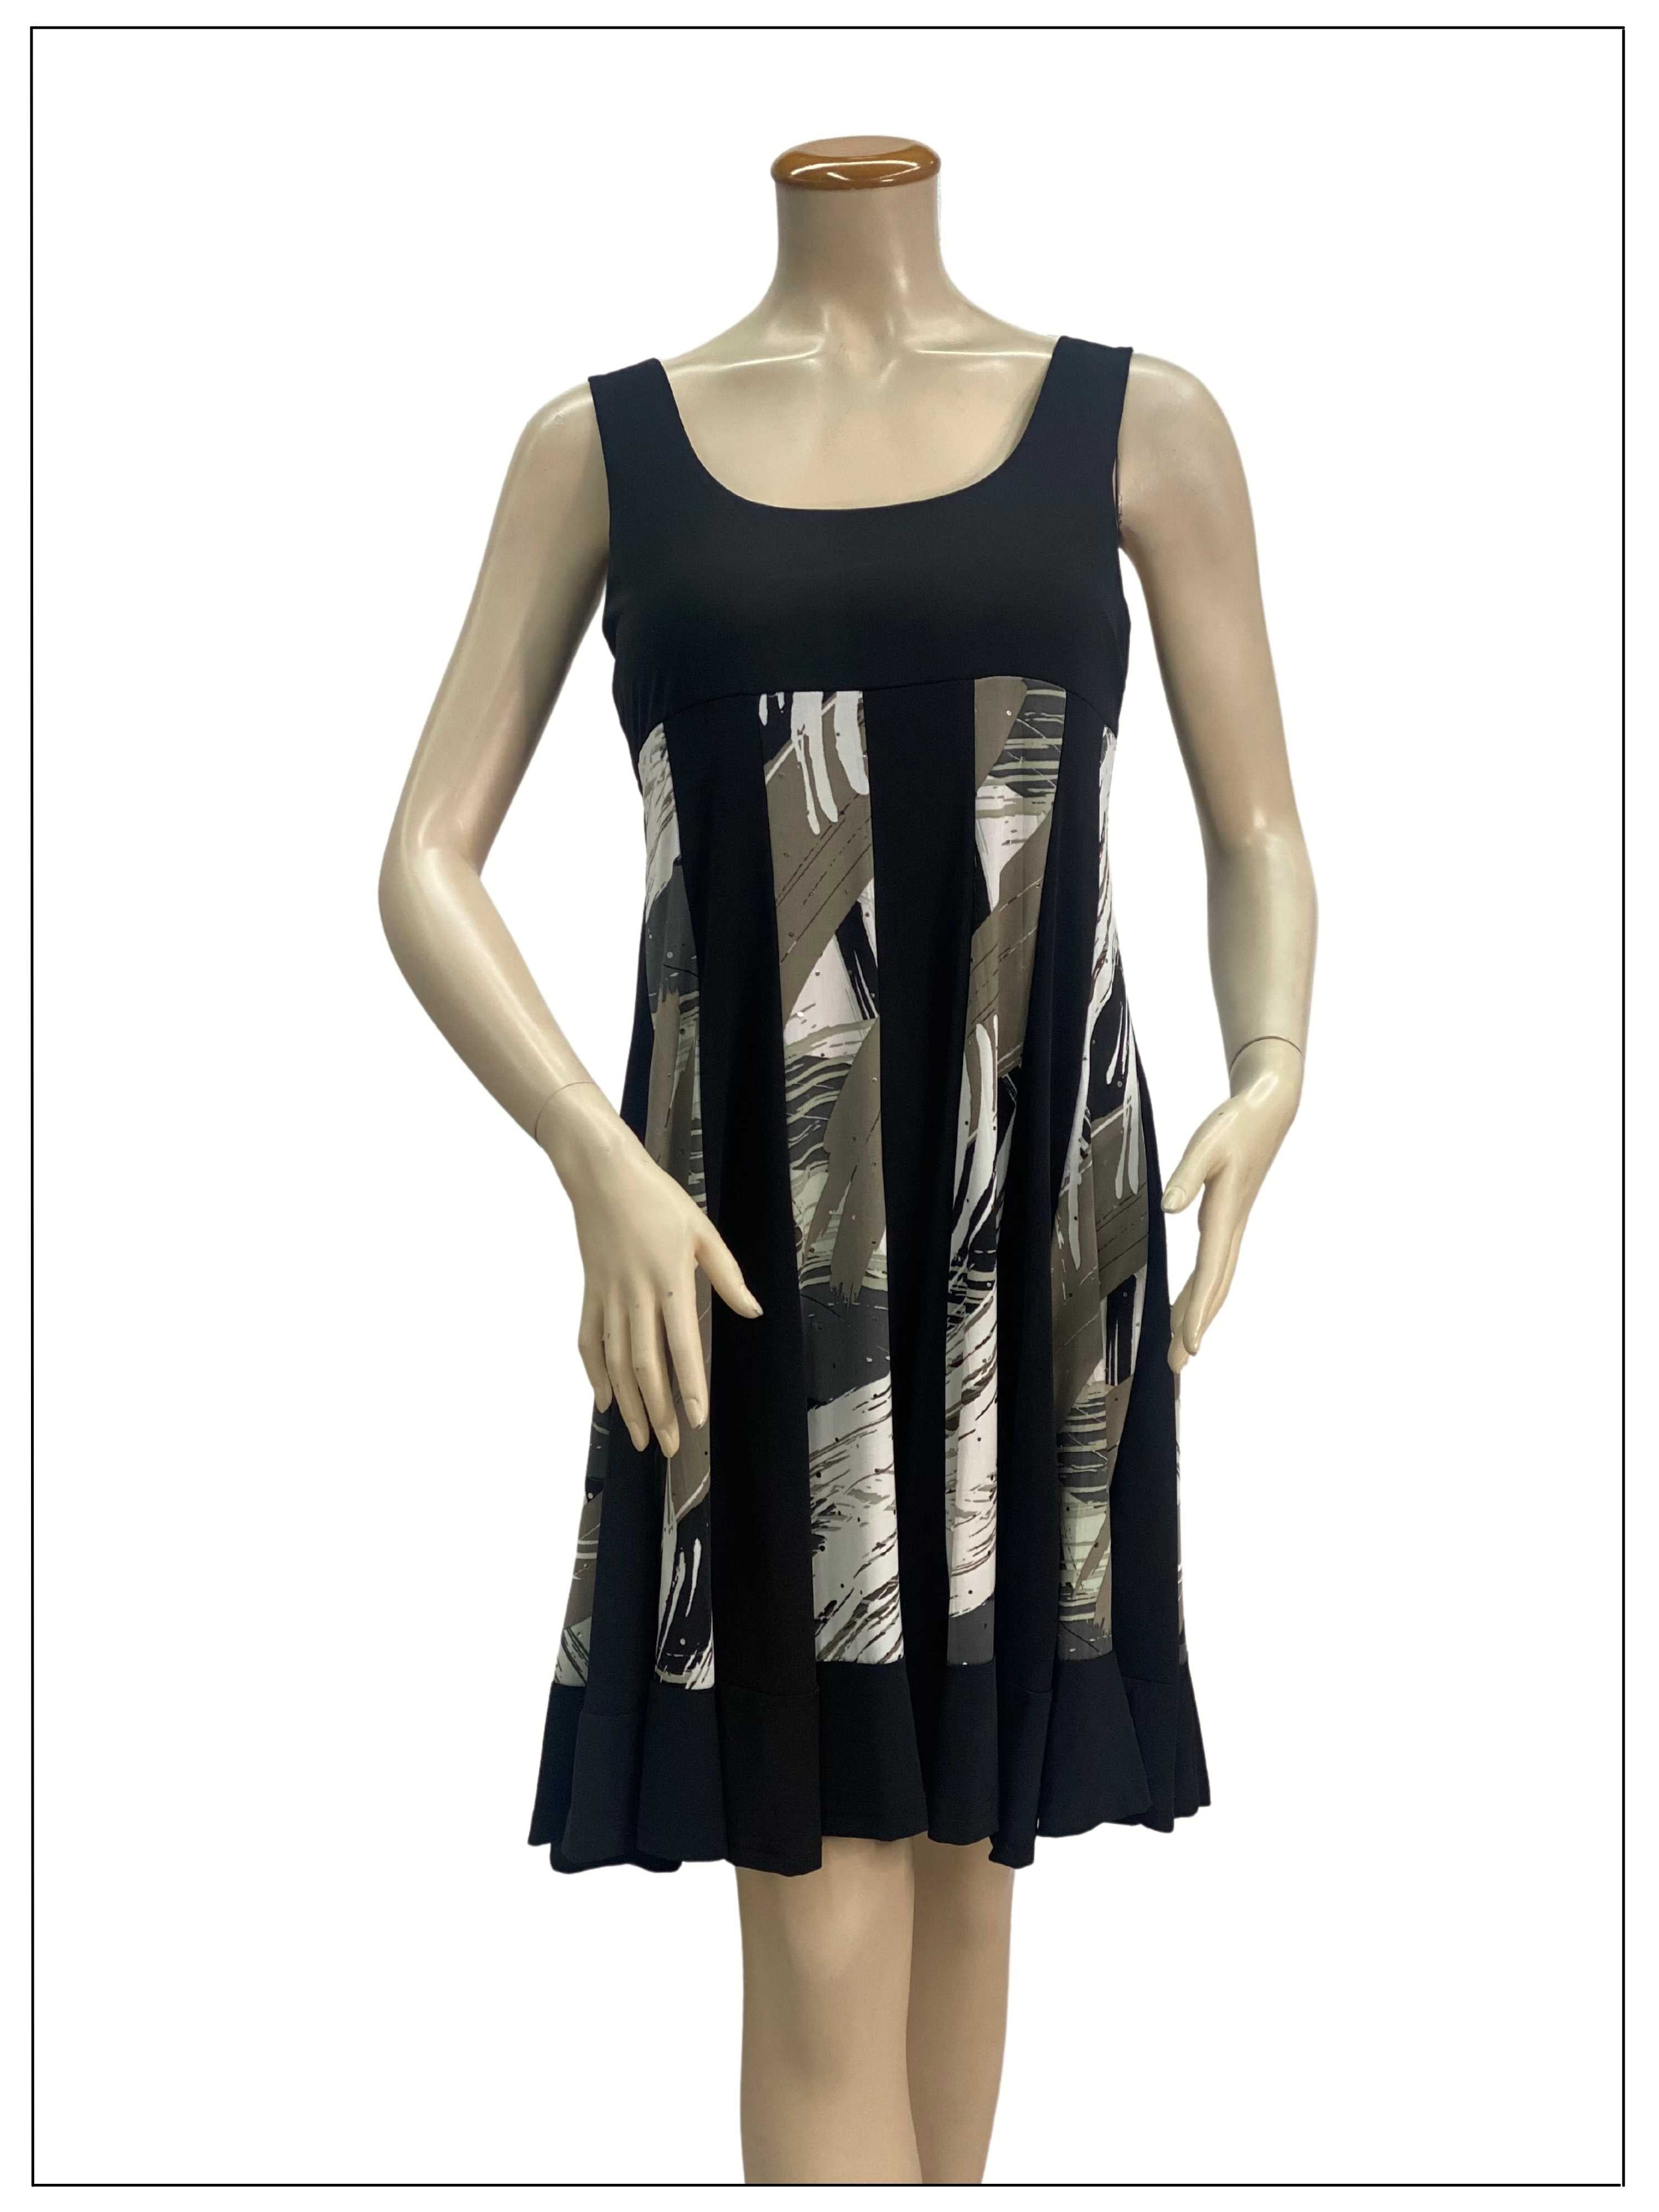 FASHQUE - Sleeveless Panel Dress - D726 SALE